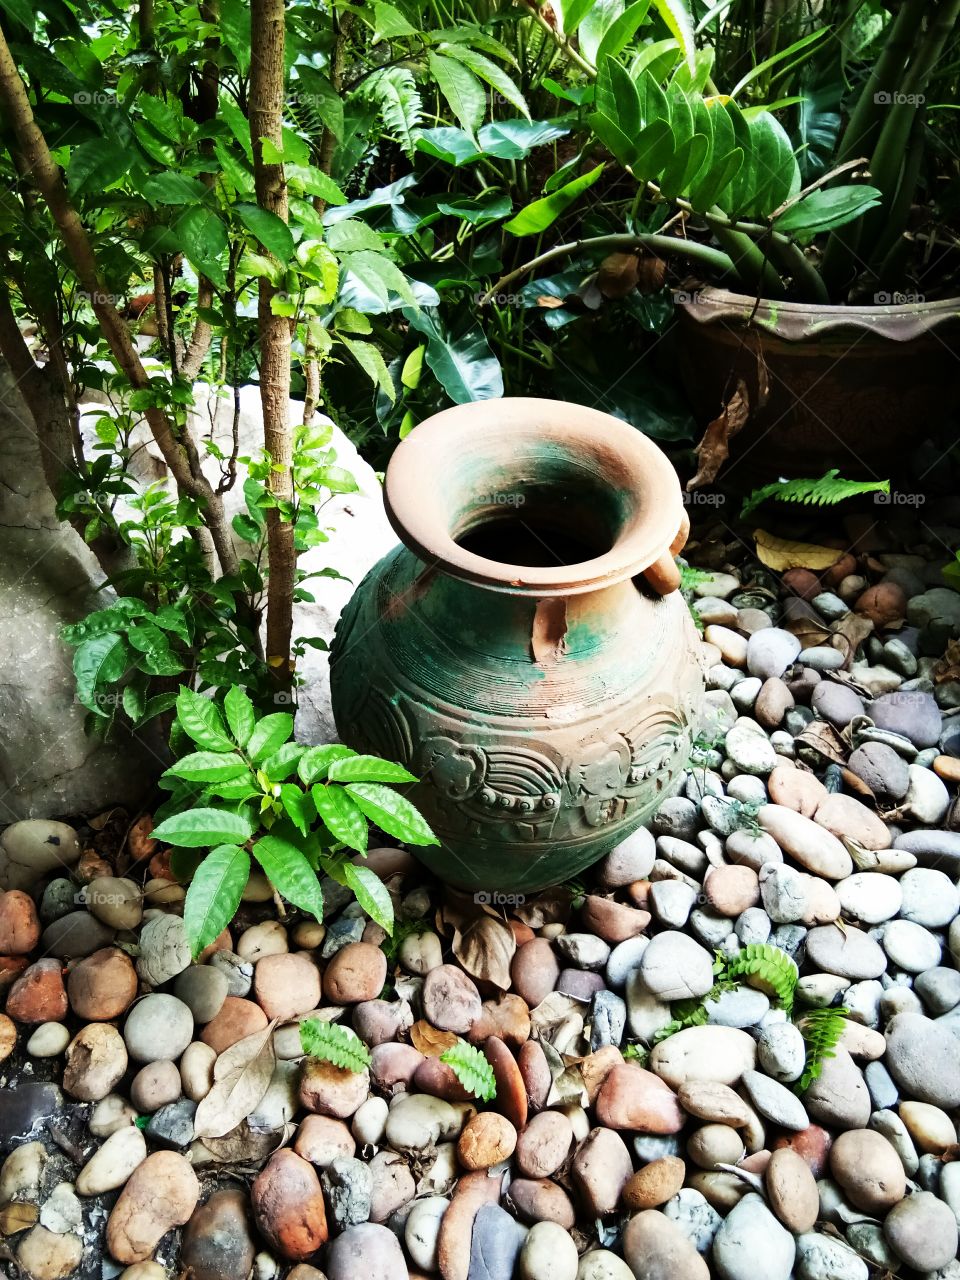 garden arrangement
decor
stone
tree
pot
old